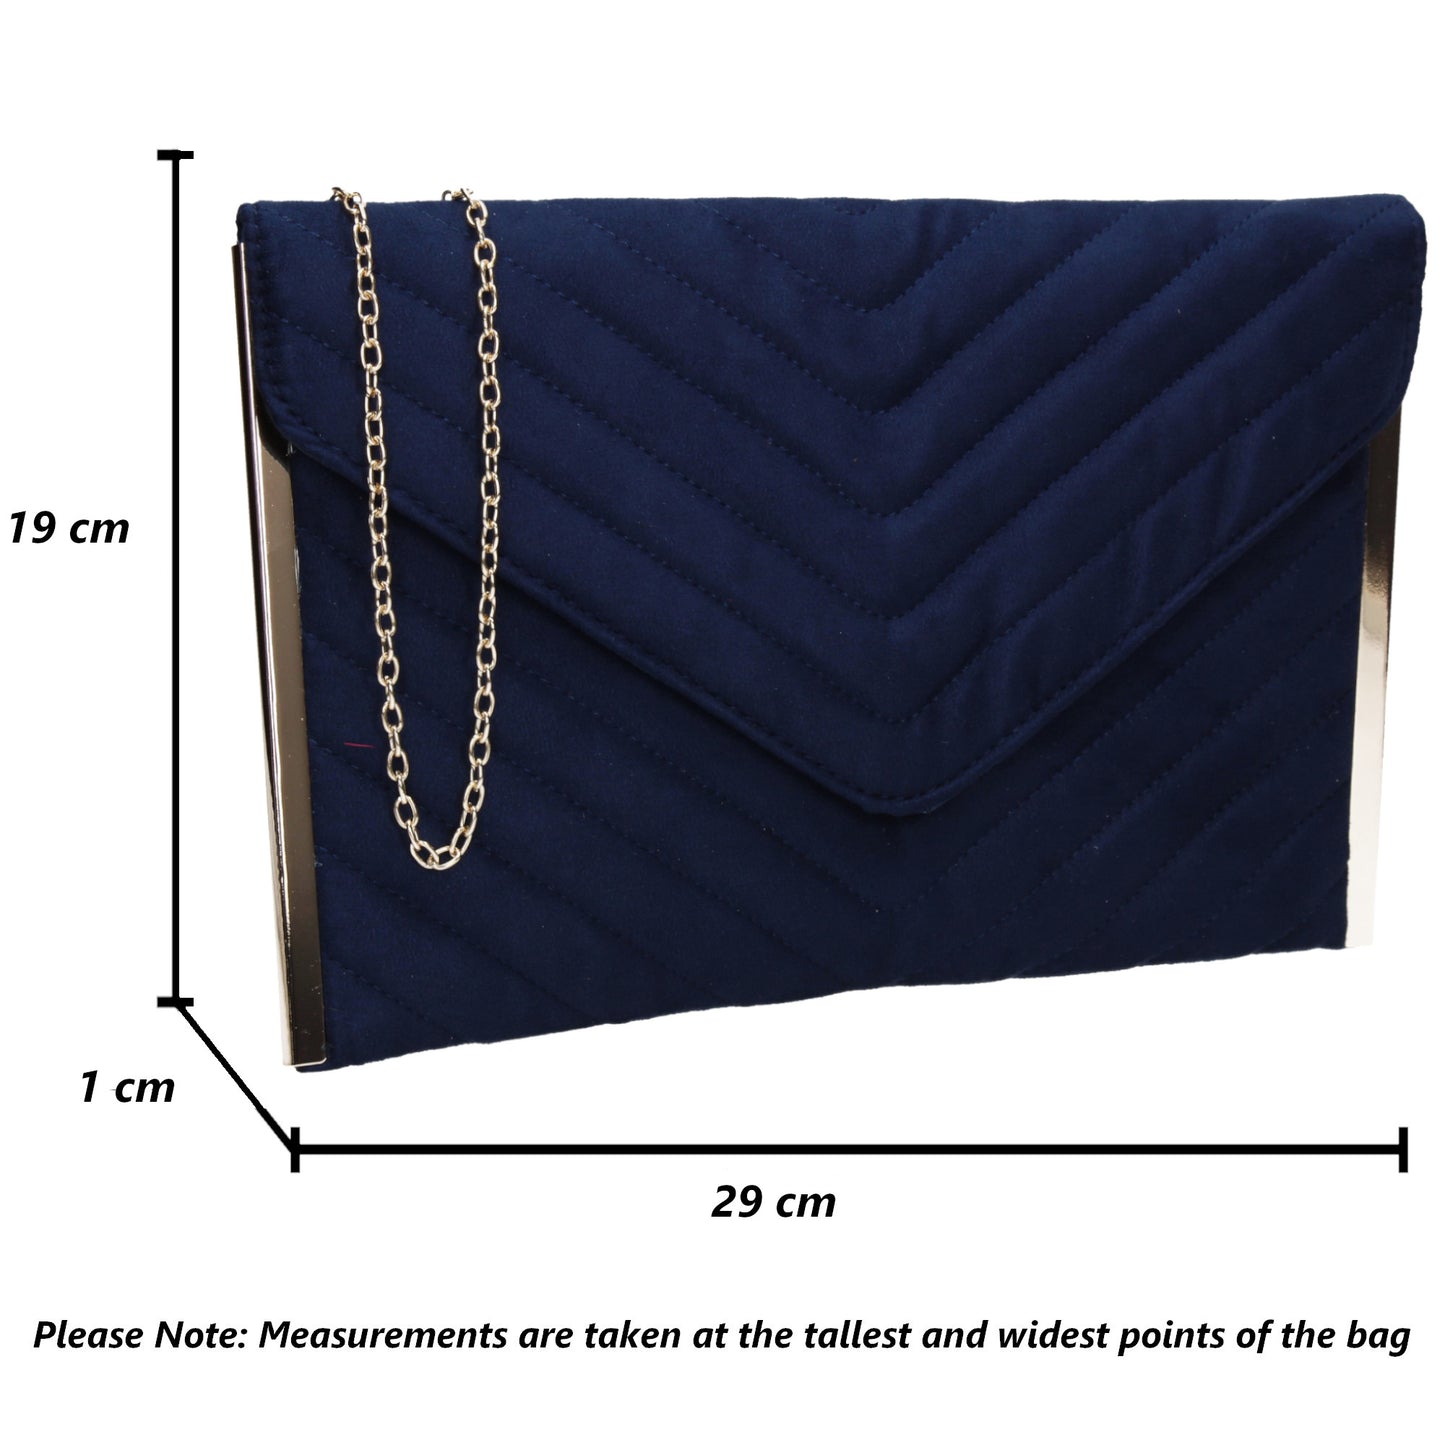 SWANKYSWANS Tessa Clutch Bag Blue Cute Cheap Clutch Bag For Weddings School and Work